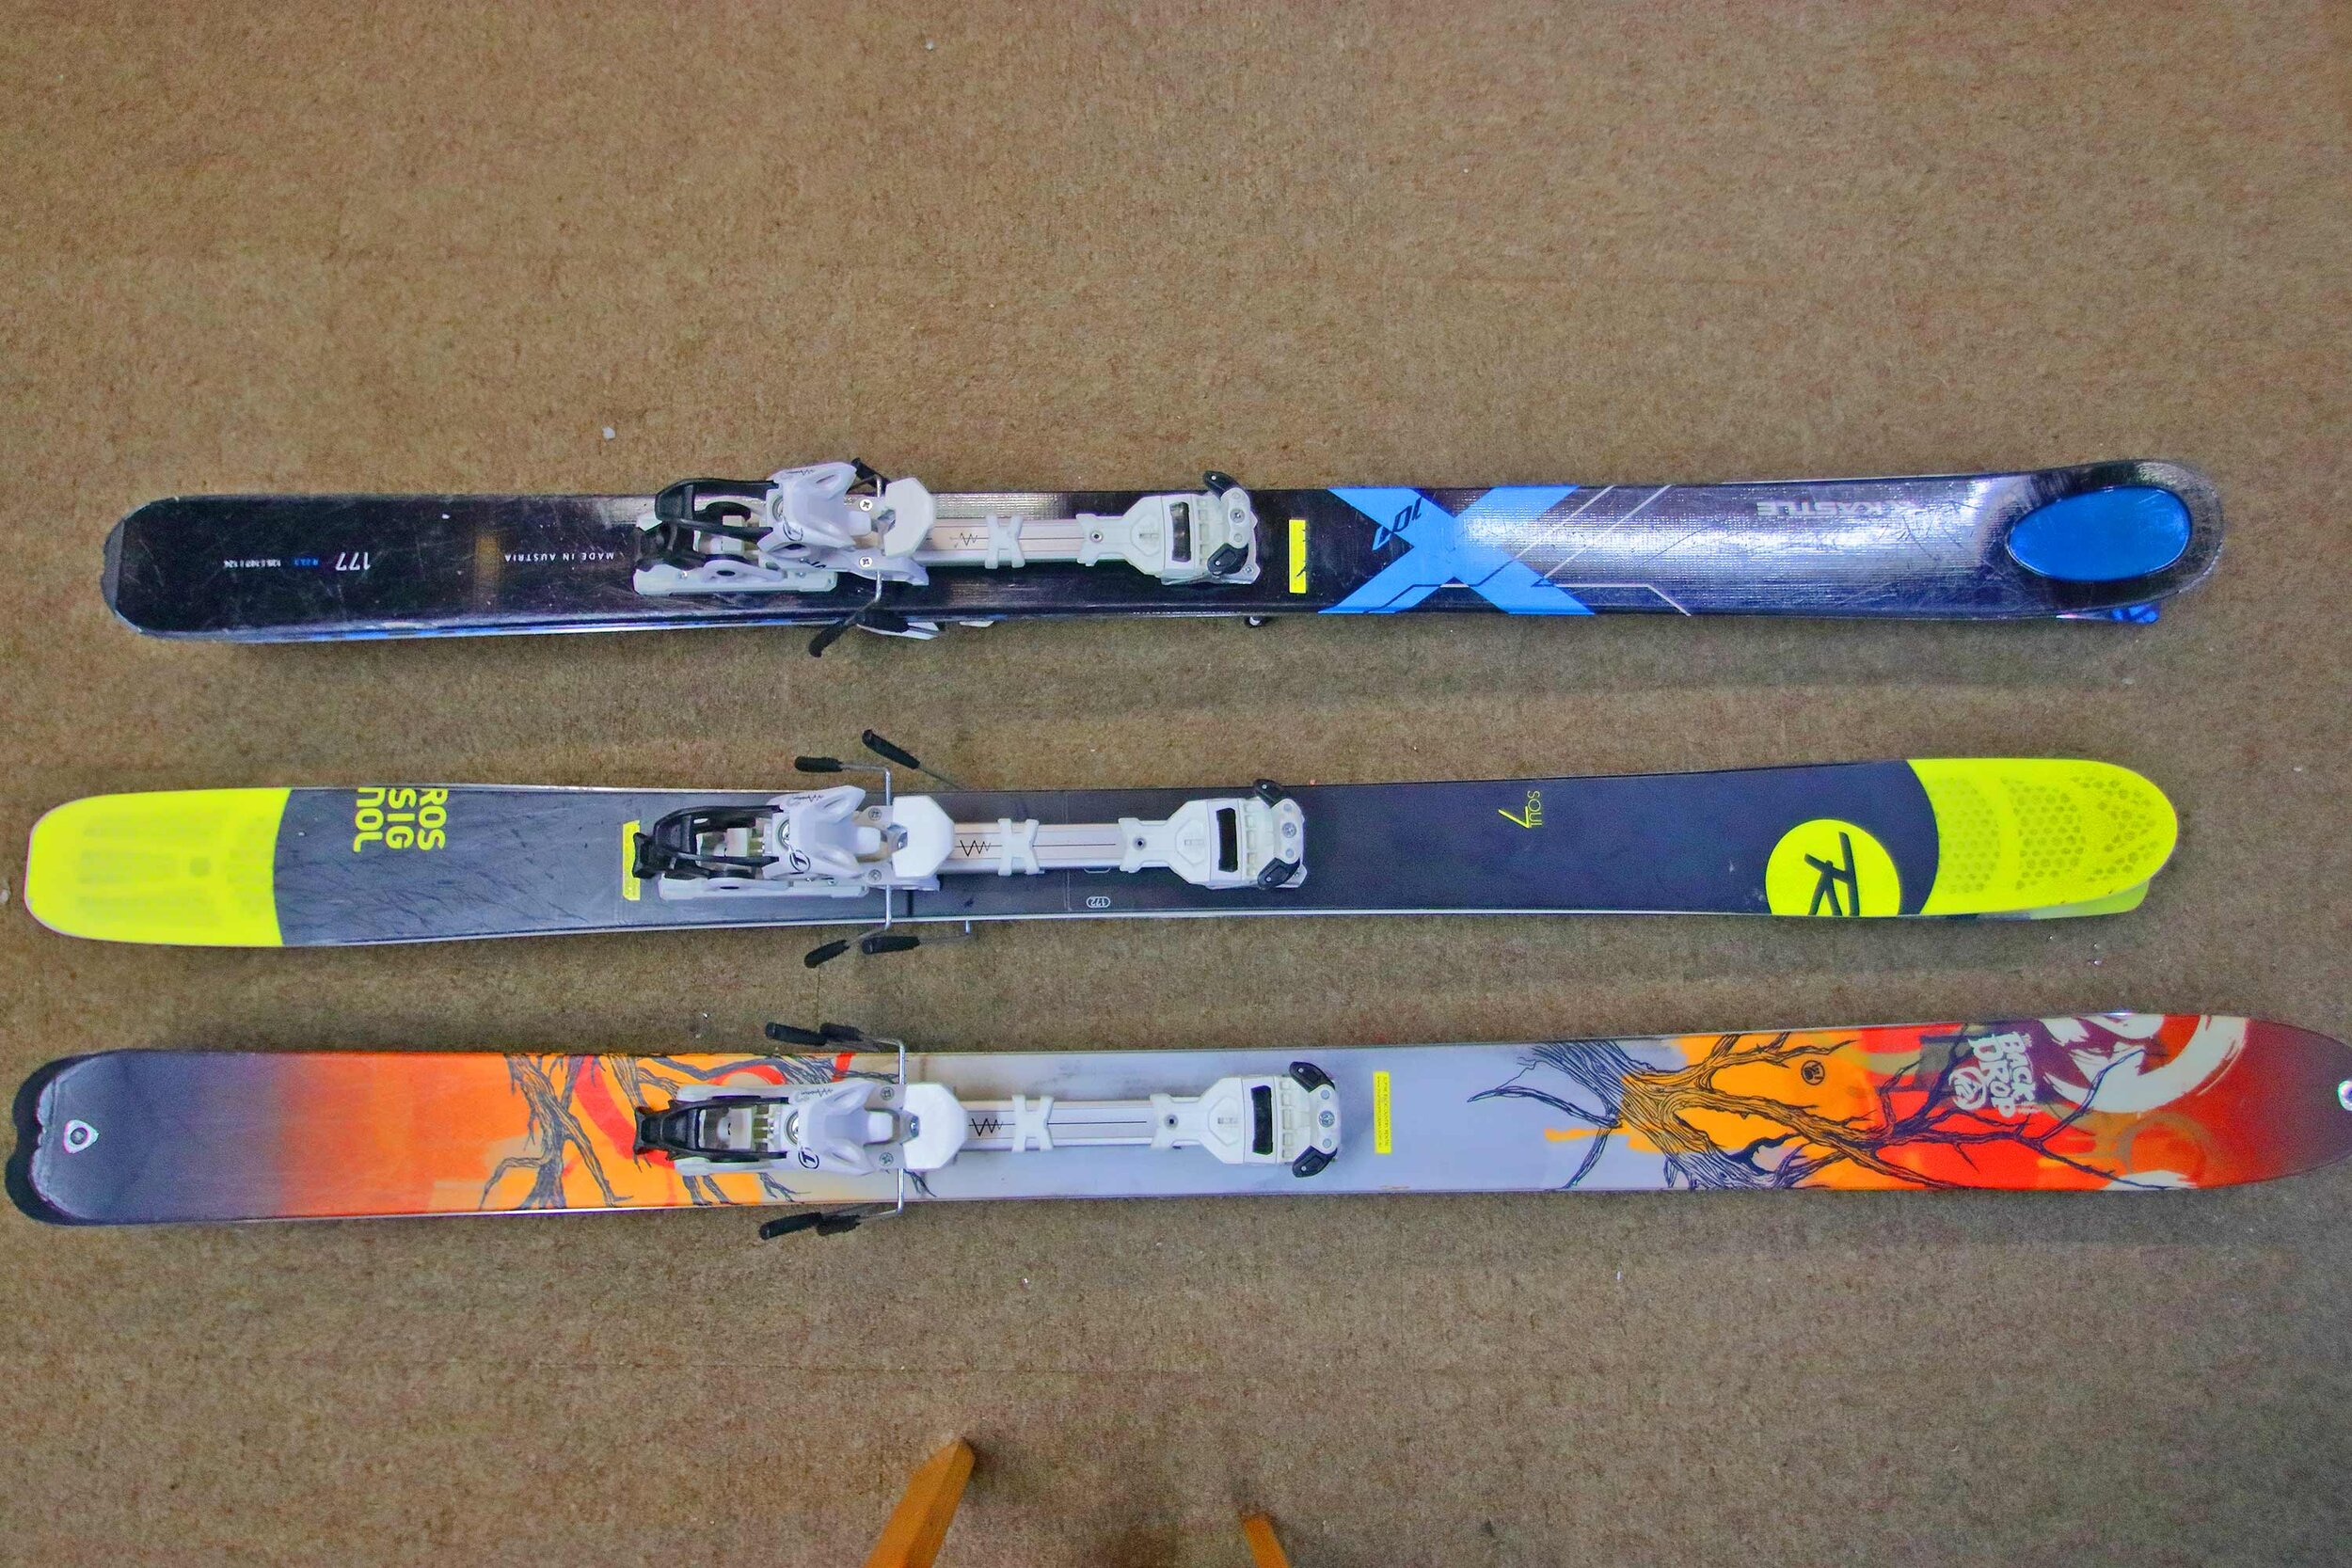  Premium rental skis. Tyrolia Ambition bindings. 